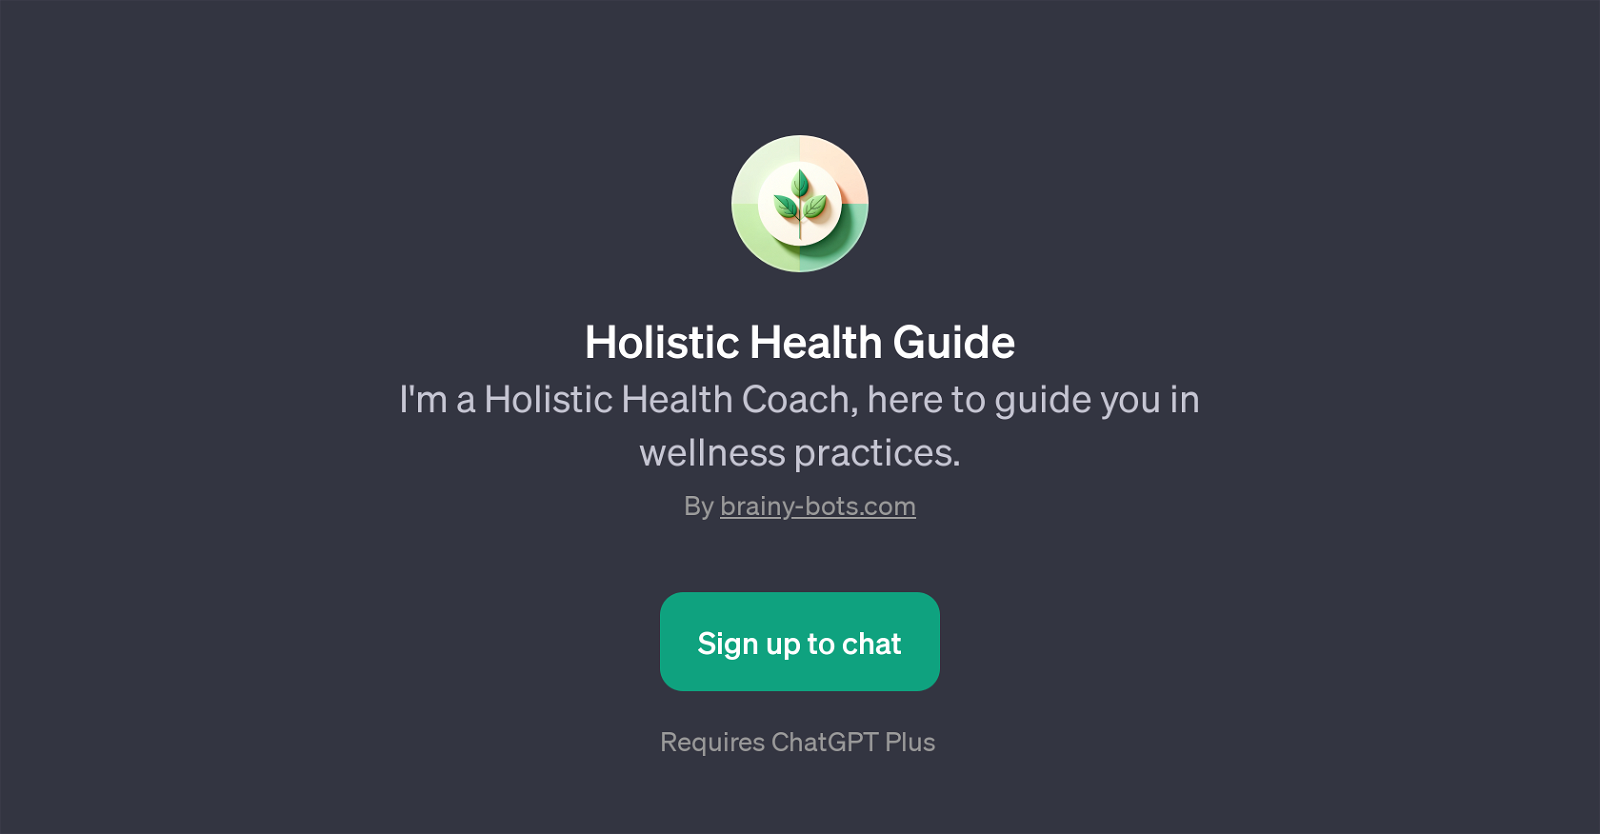 Holistic Health Guide website